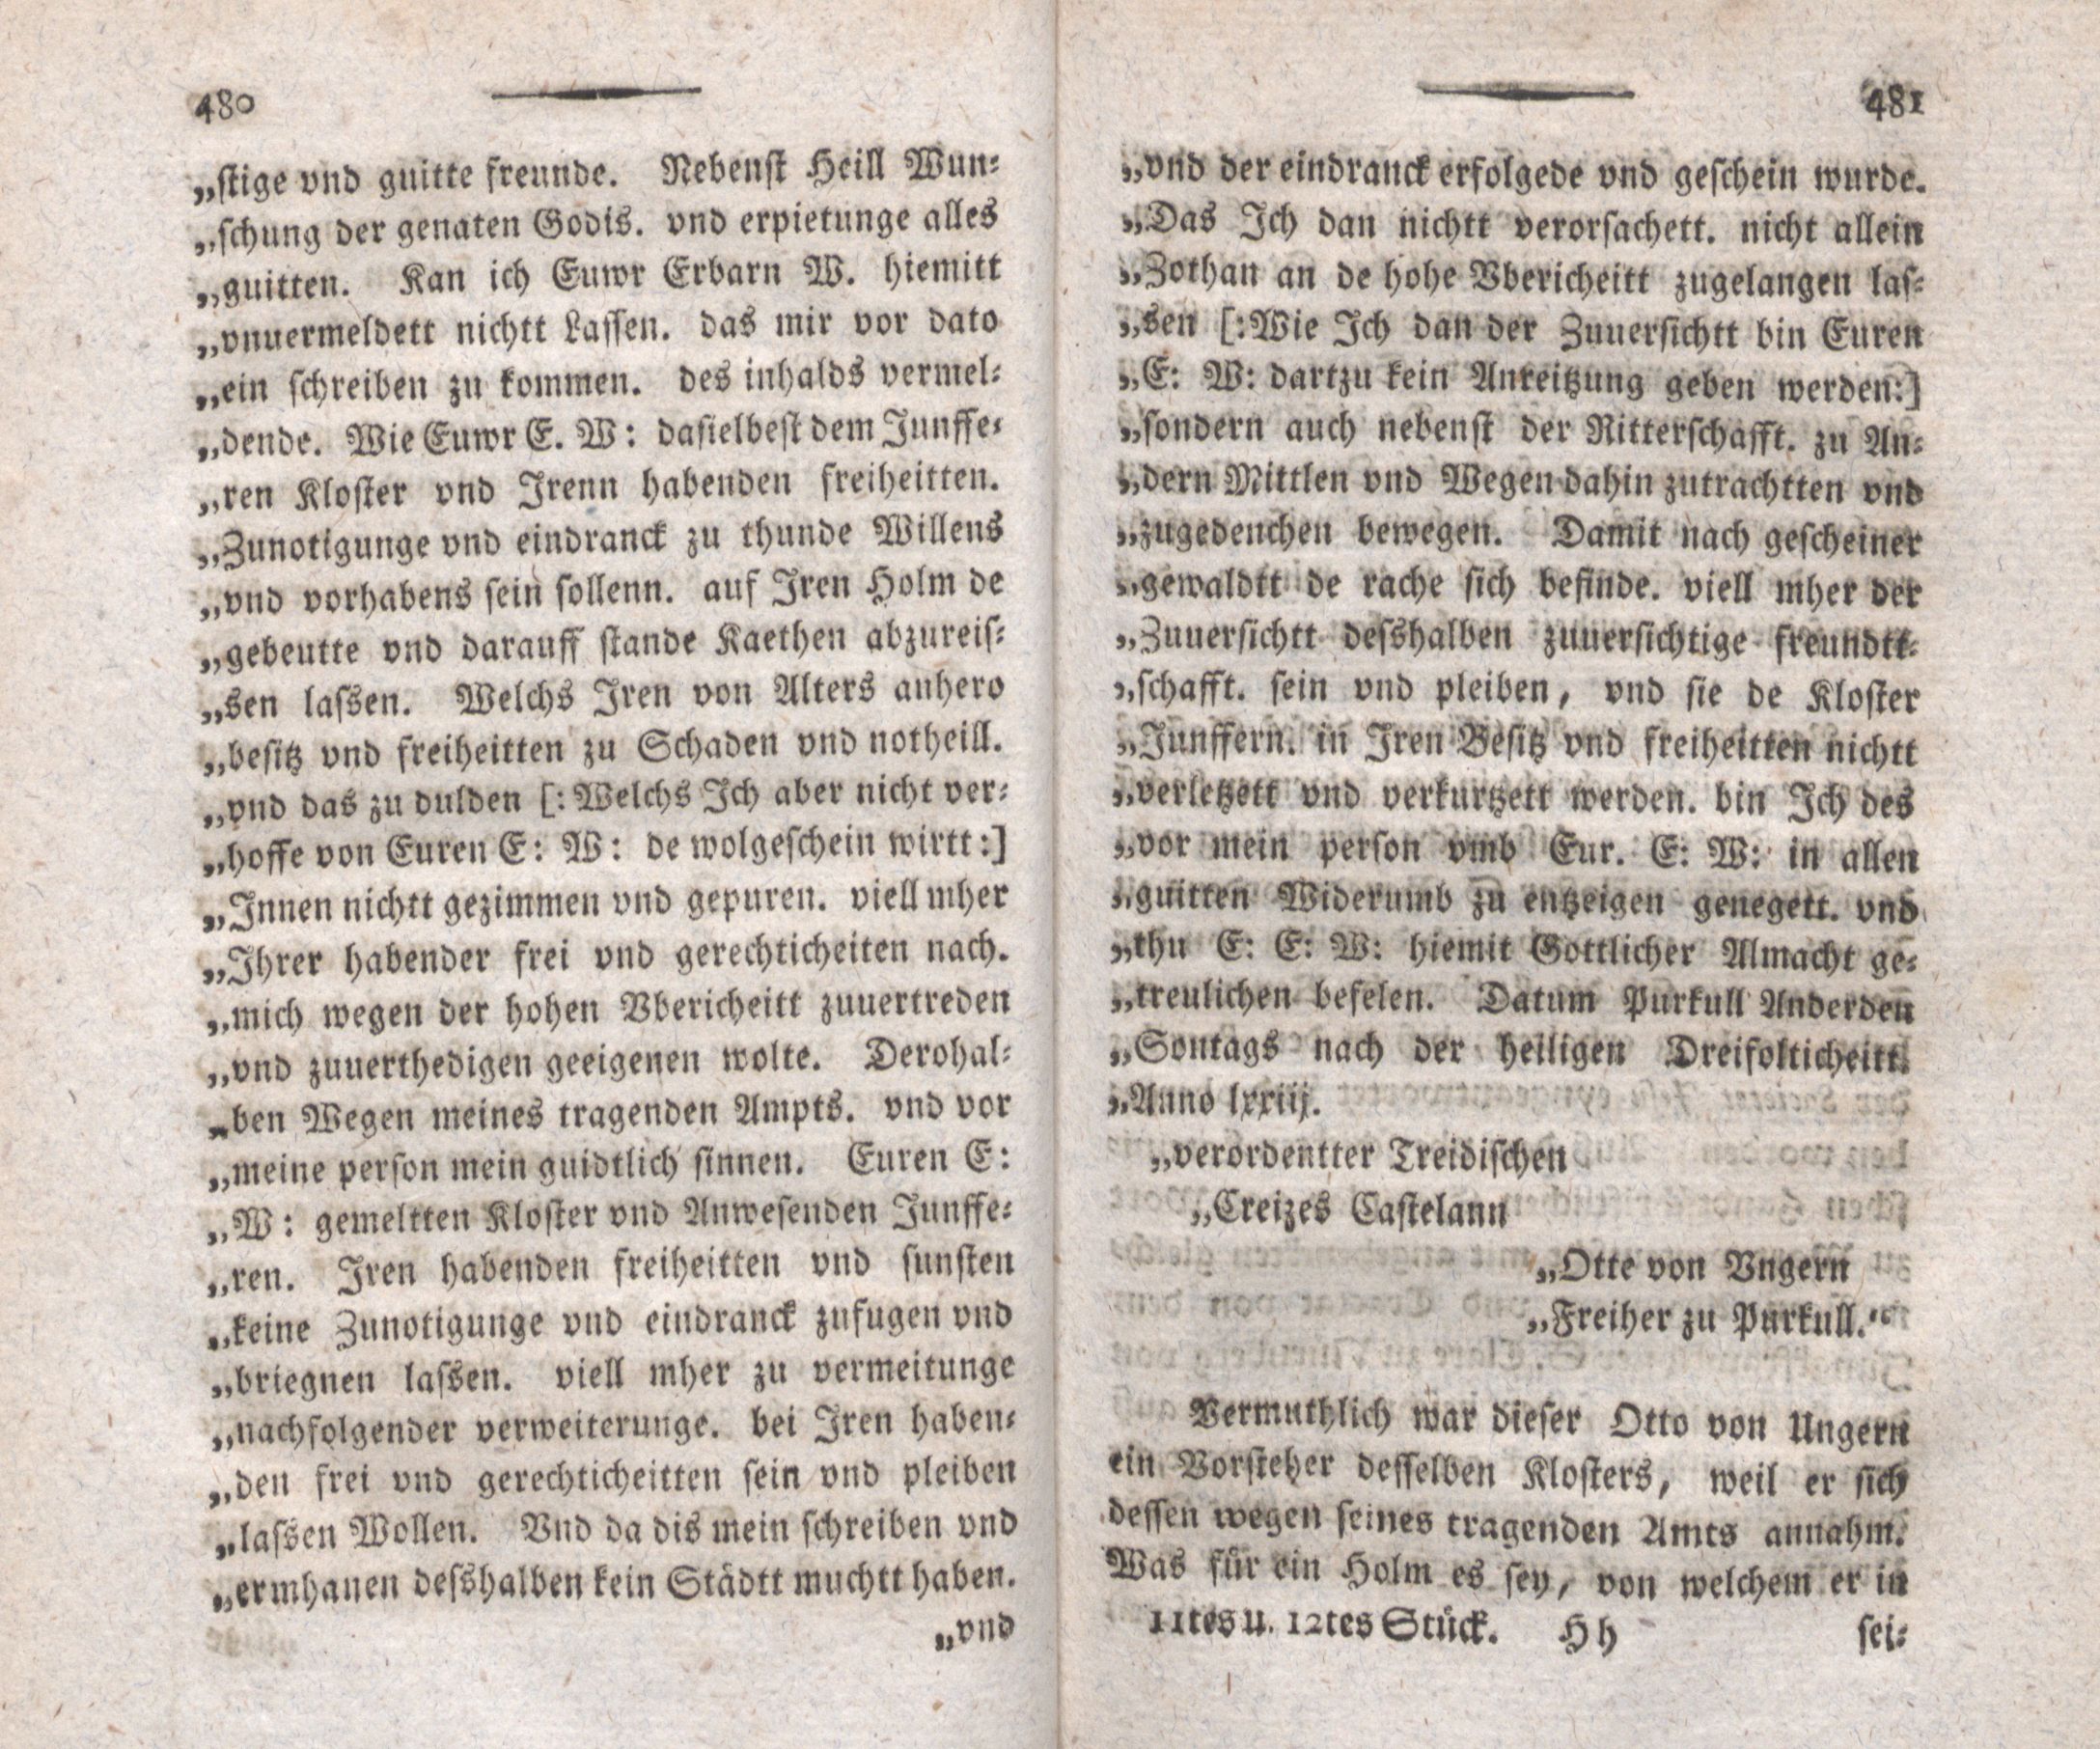 Neue nordische Miscellaneen [11-12] (1795) | 253. (480-481) Main body of text